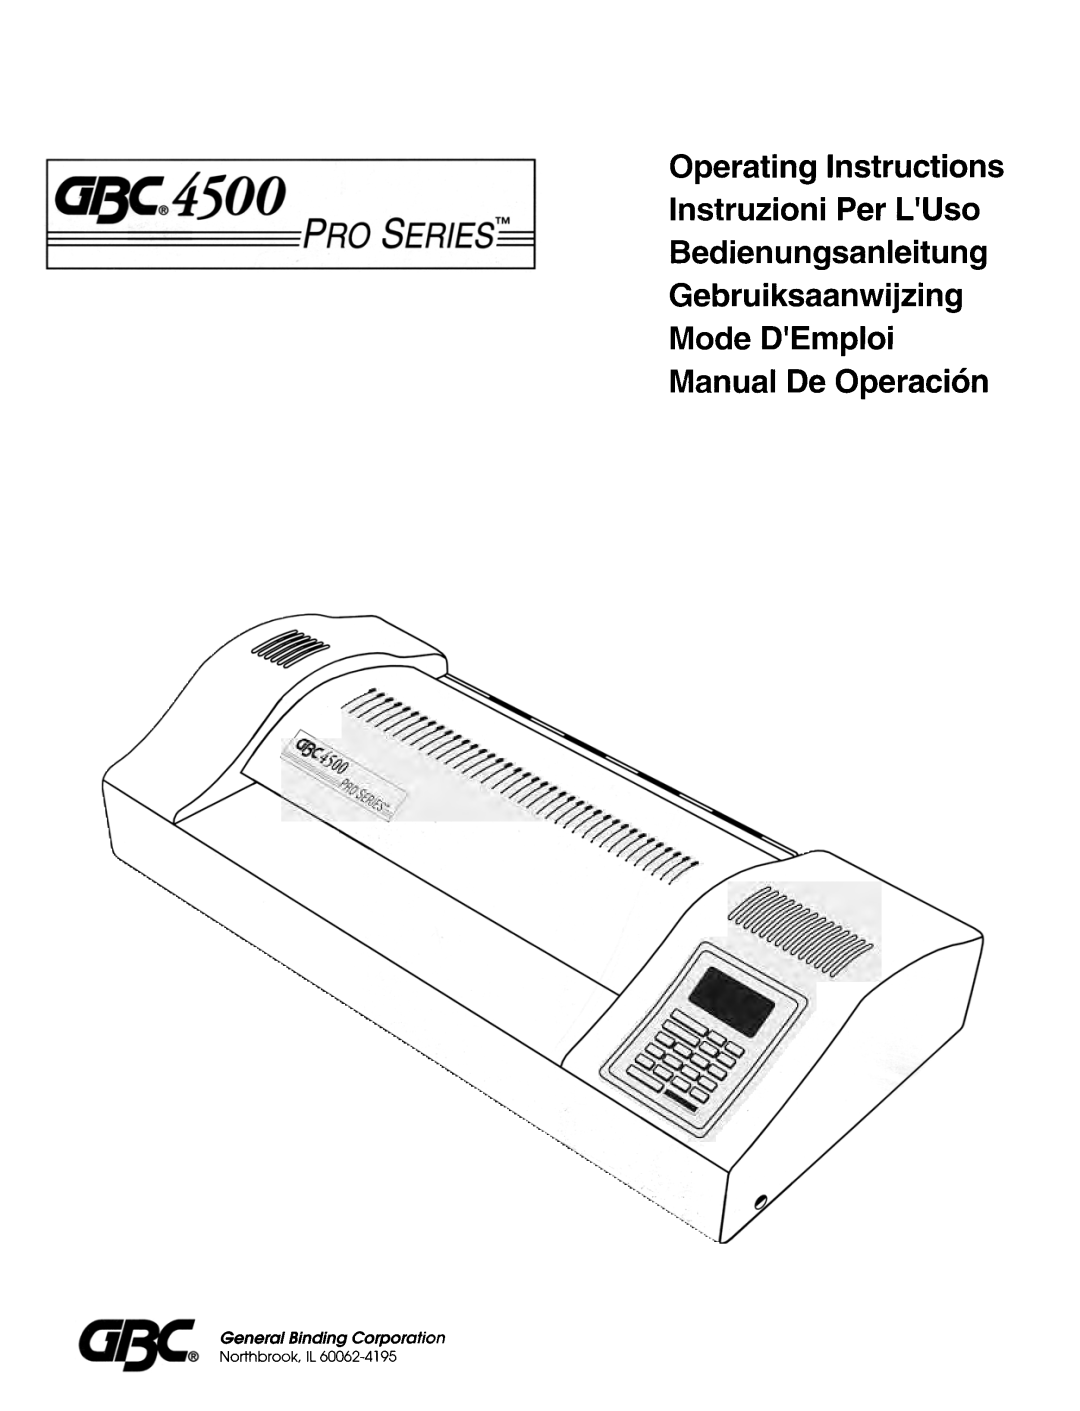 GBC 4500 manual General Binding Corporation Northbrook, IL, Gebru i ksaanwi jzi ng Mode DEmploi Manual De Operaci6n 